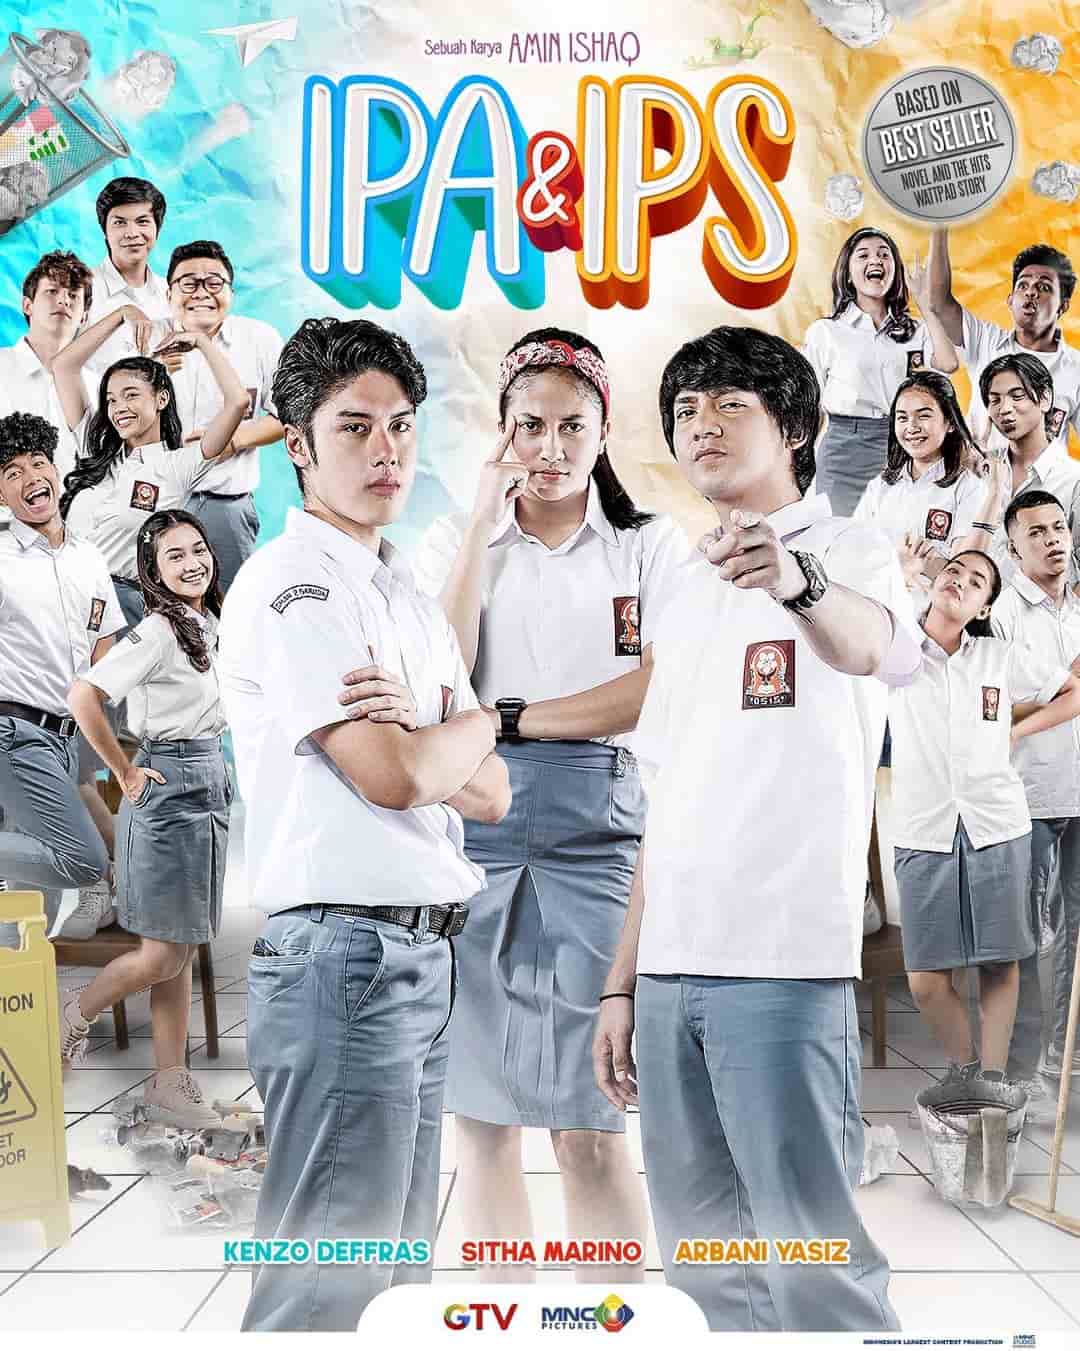 IPA & IPS - Sinopsis, Pemain, OST, Episode, Review